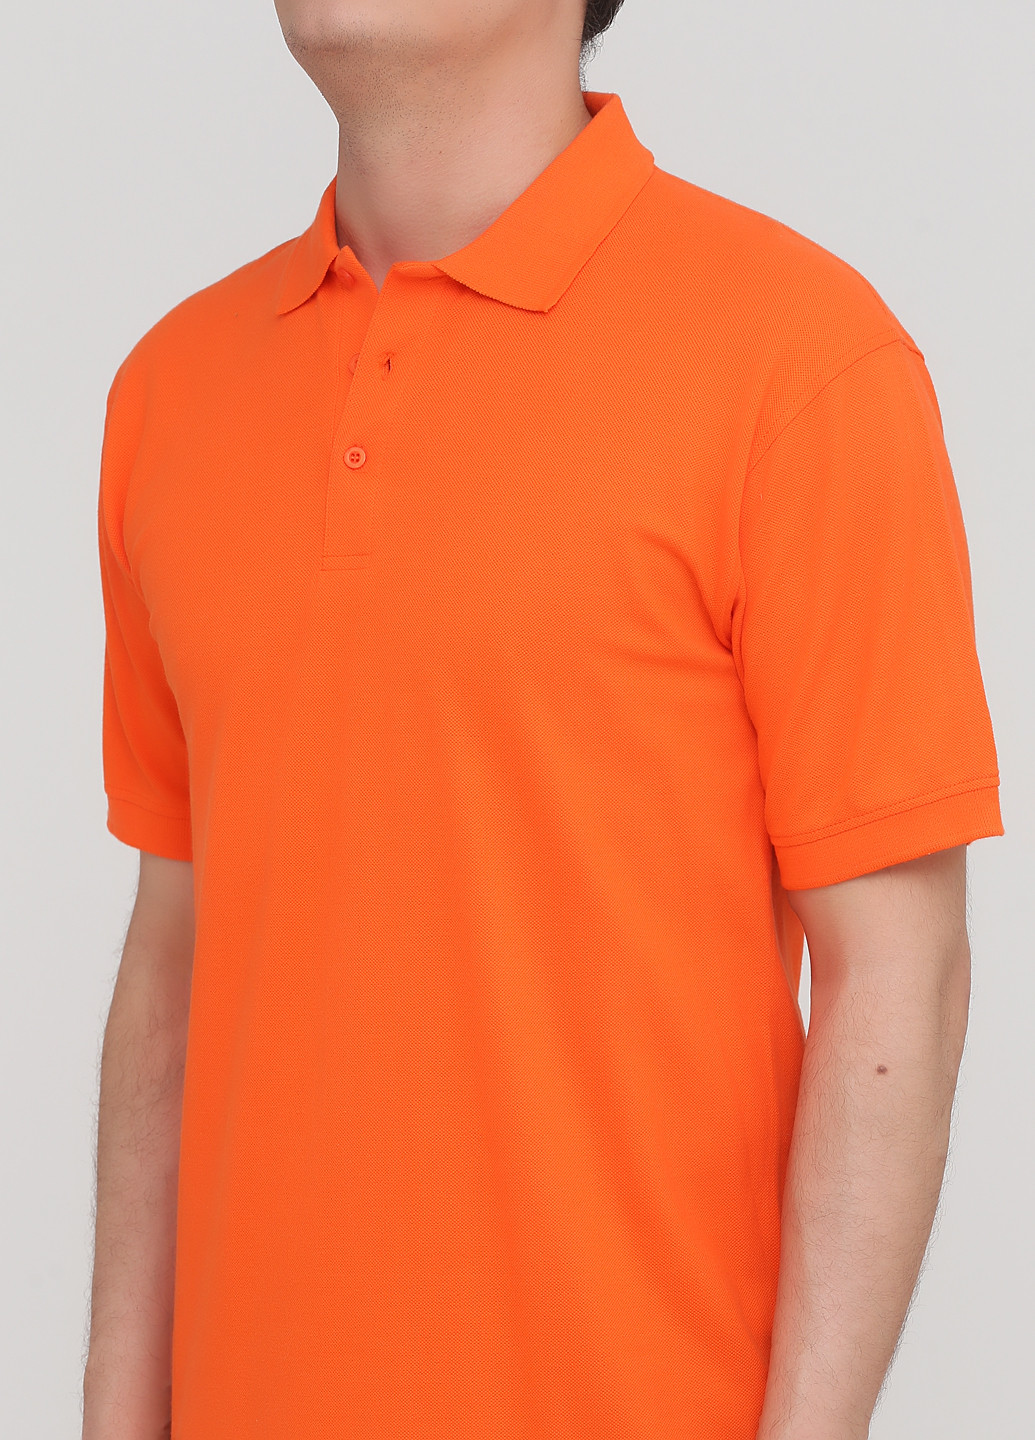 Оранжевая футболка-поло для мужчин Port Company однотонная